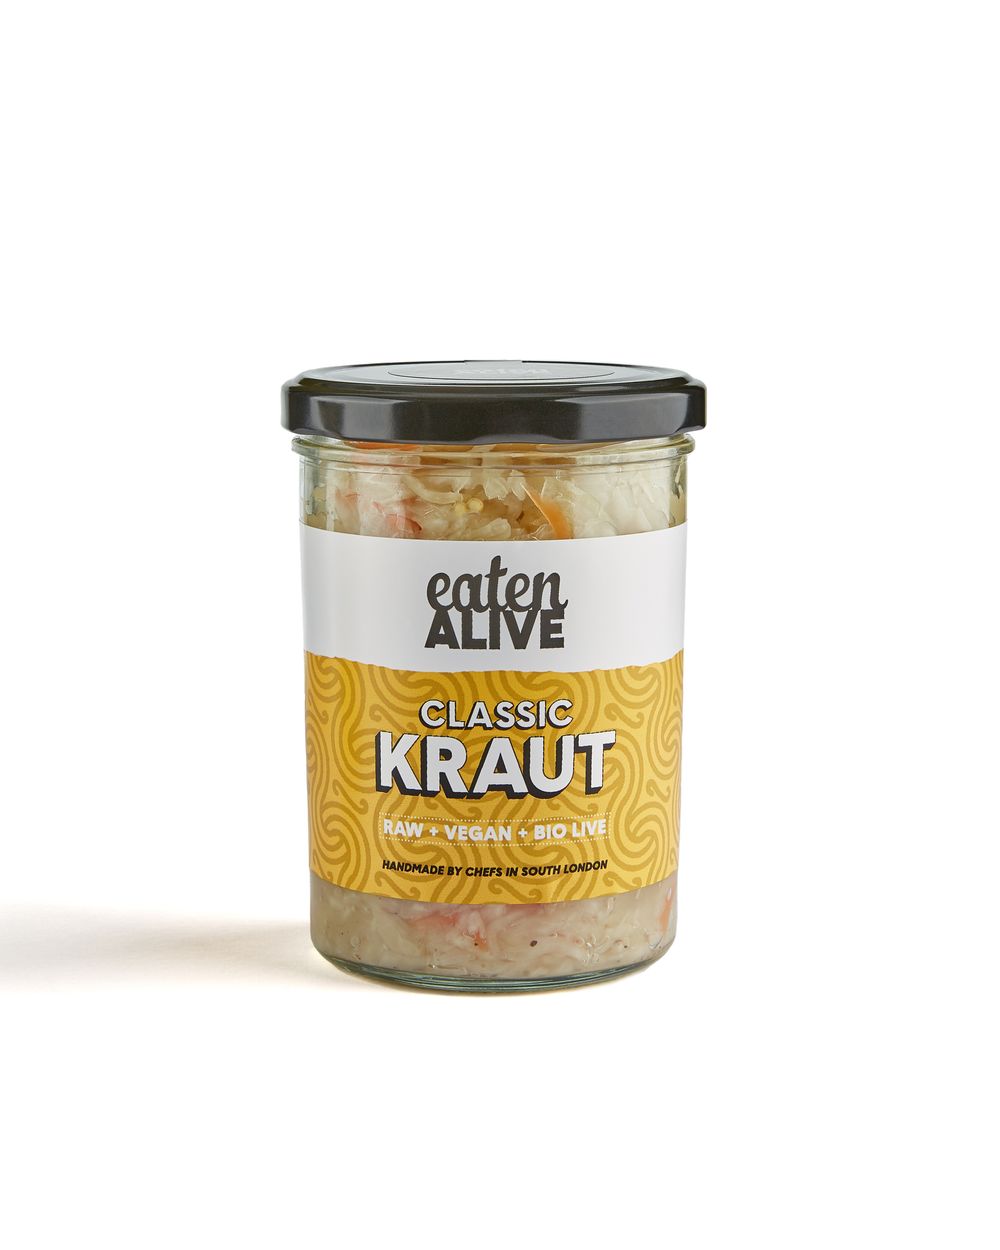 Classic Kraut – Eaten Alive